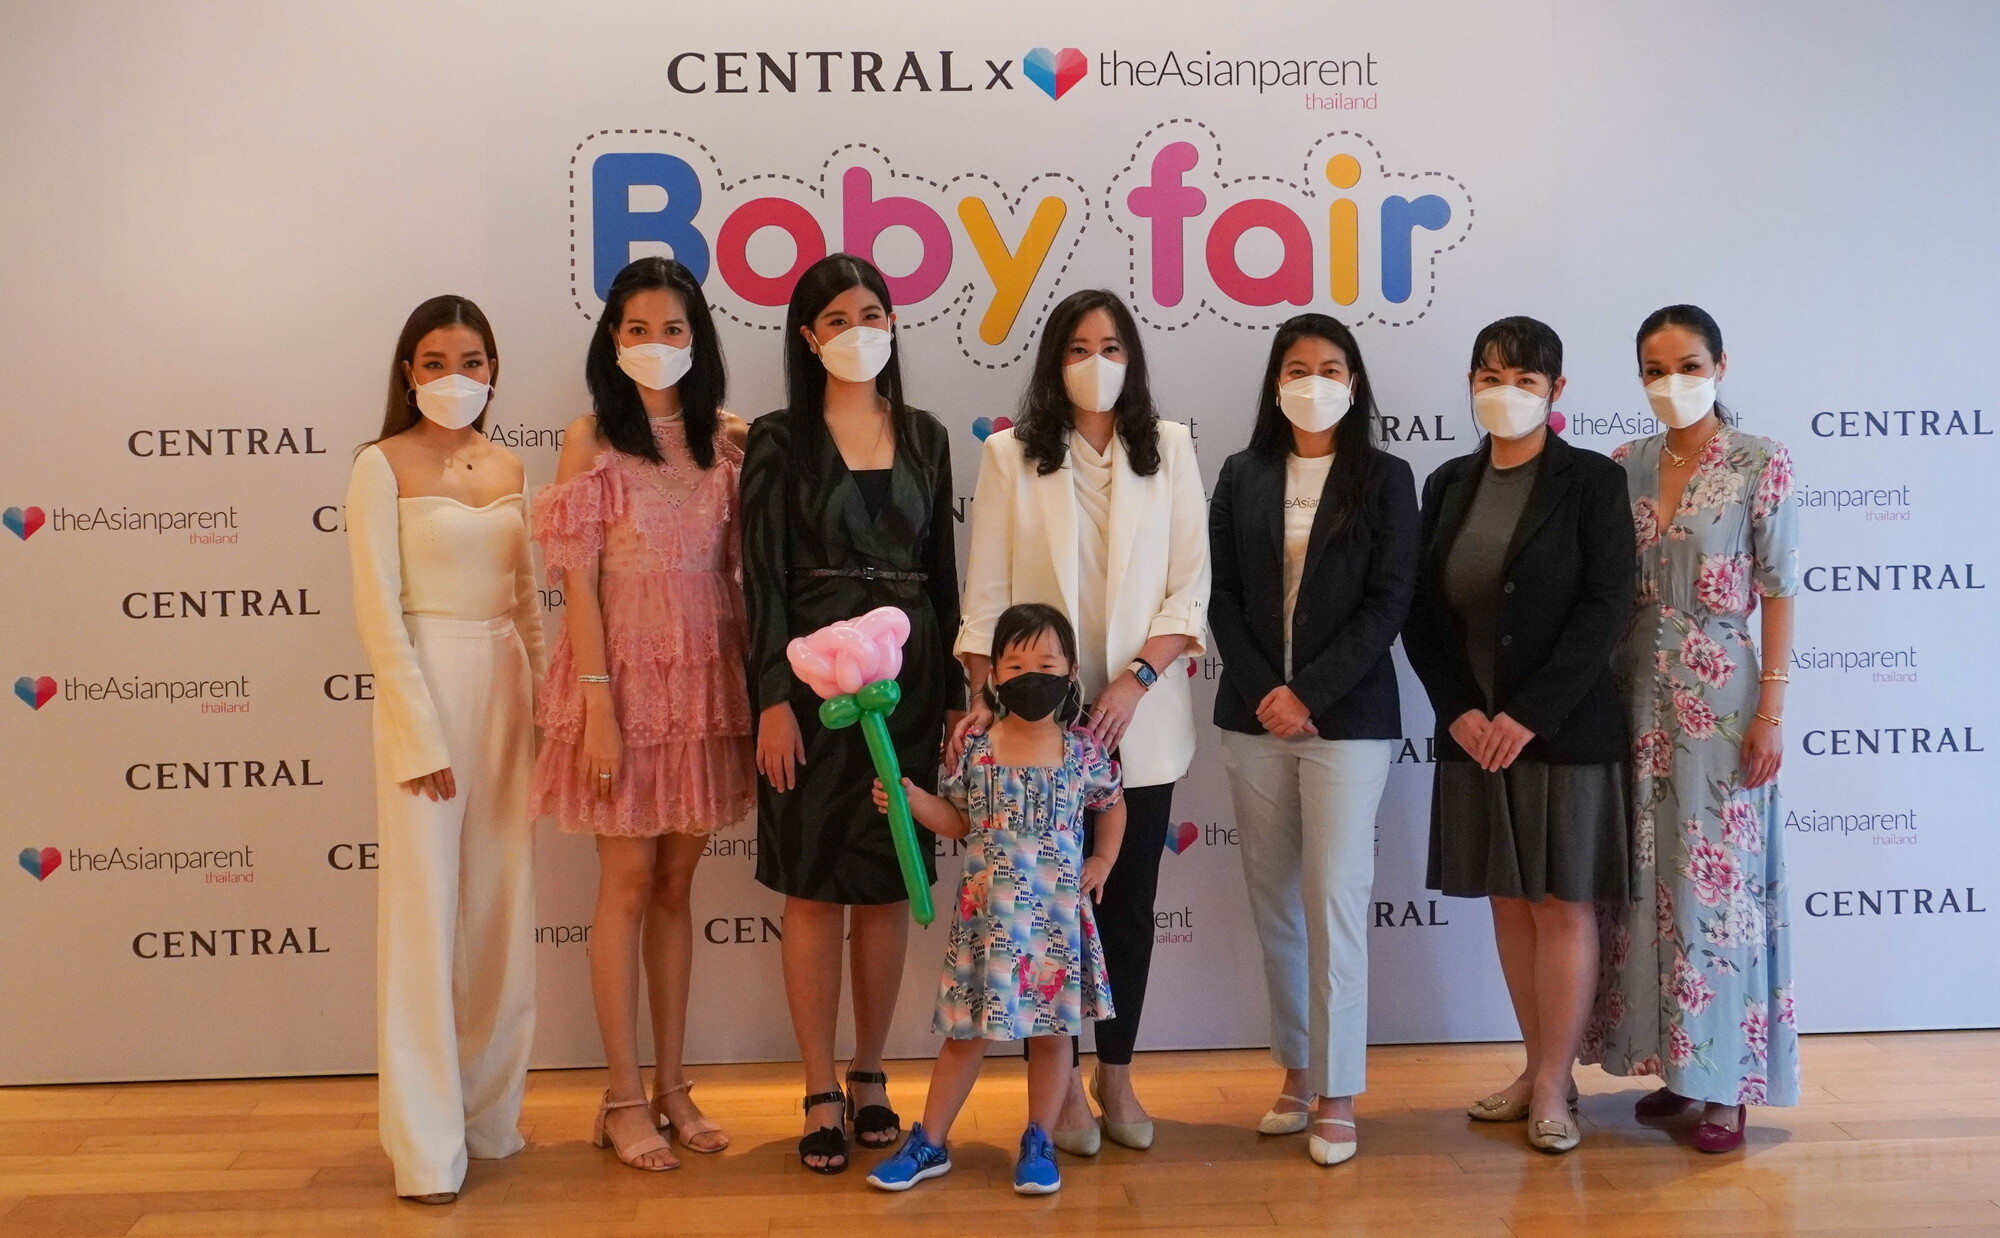 theAsianparent Thailand สังคมออนไลน์ครอบครัวที่ใหญ่ที่สุดในอาเซียน จับมือเซ็นทรัล จัดงาน theAsianparent Thailand X Central Baby Fair